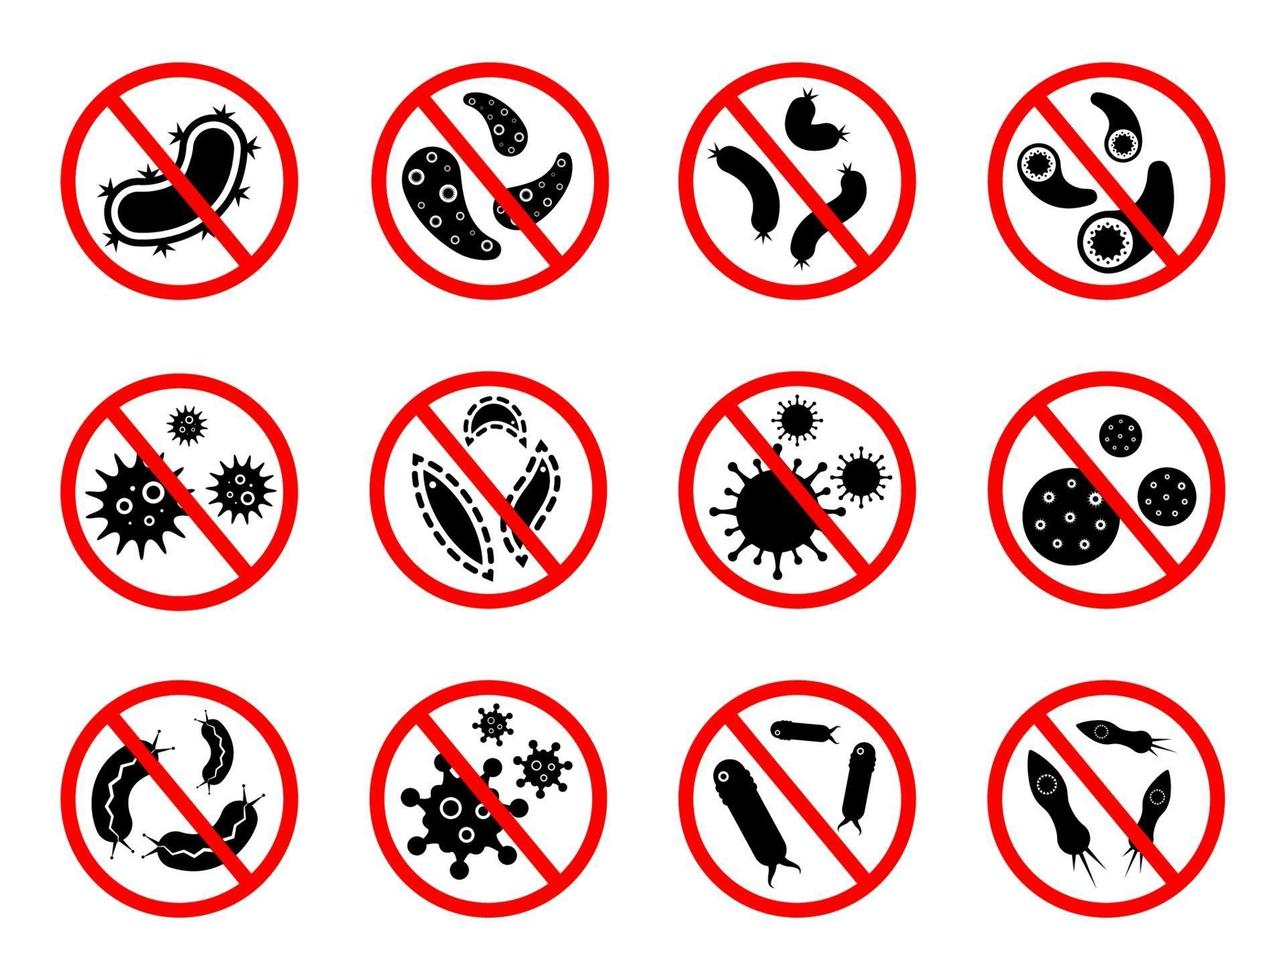 Virus stop sign icon set - vector illustration .